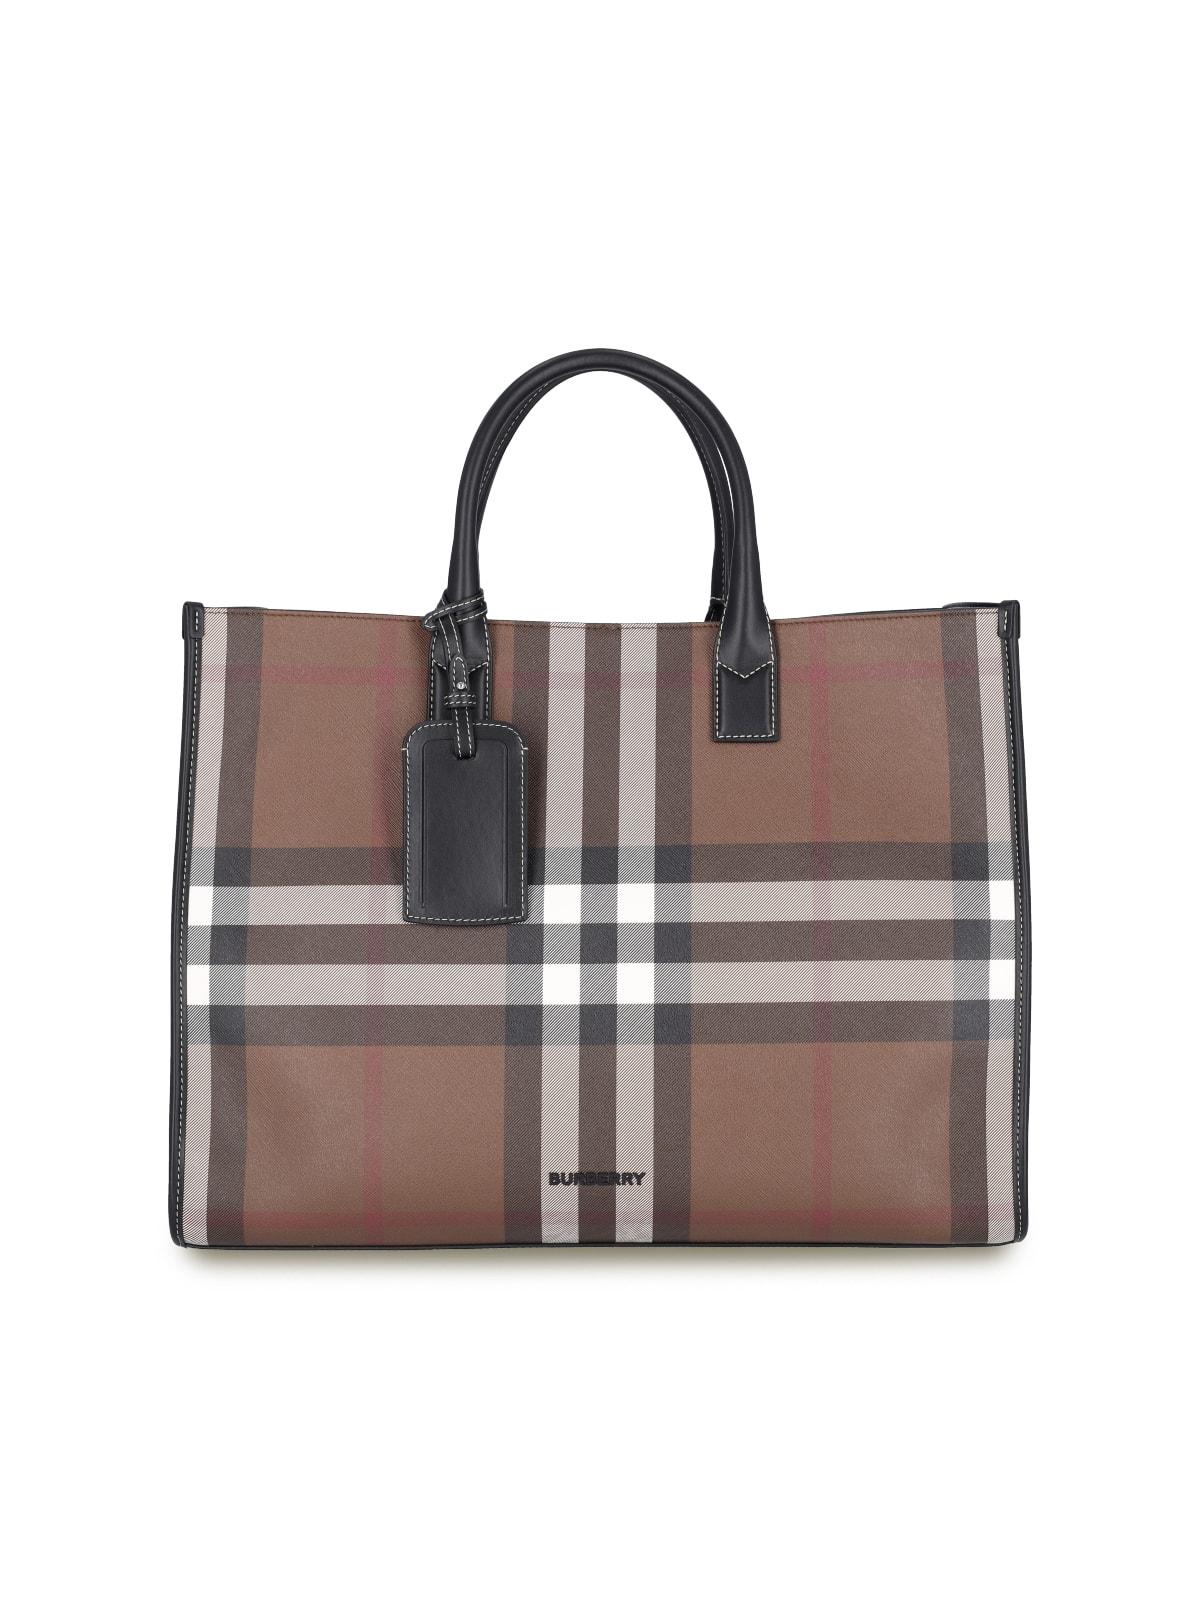 Fashion Handbags World: new arrival on replica burberry handbags